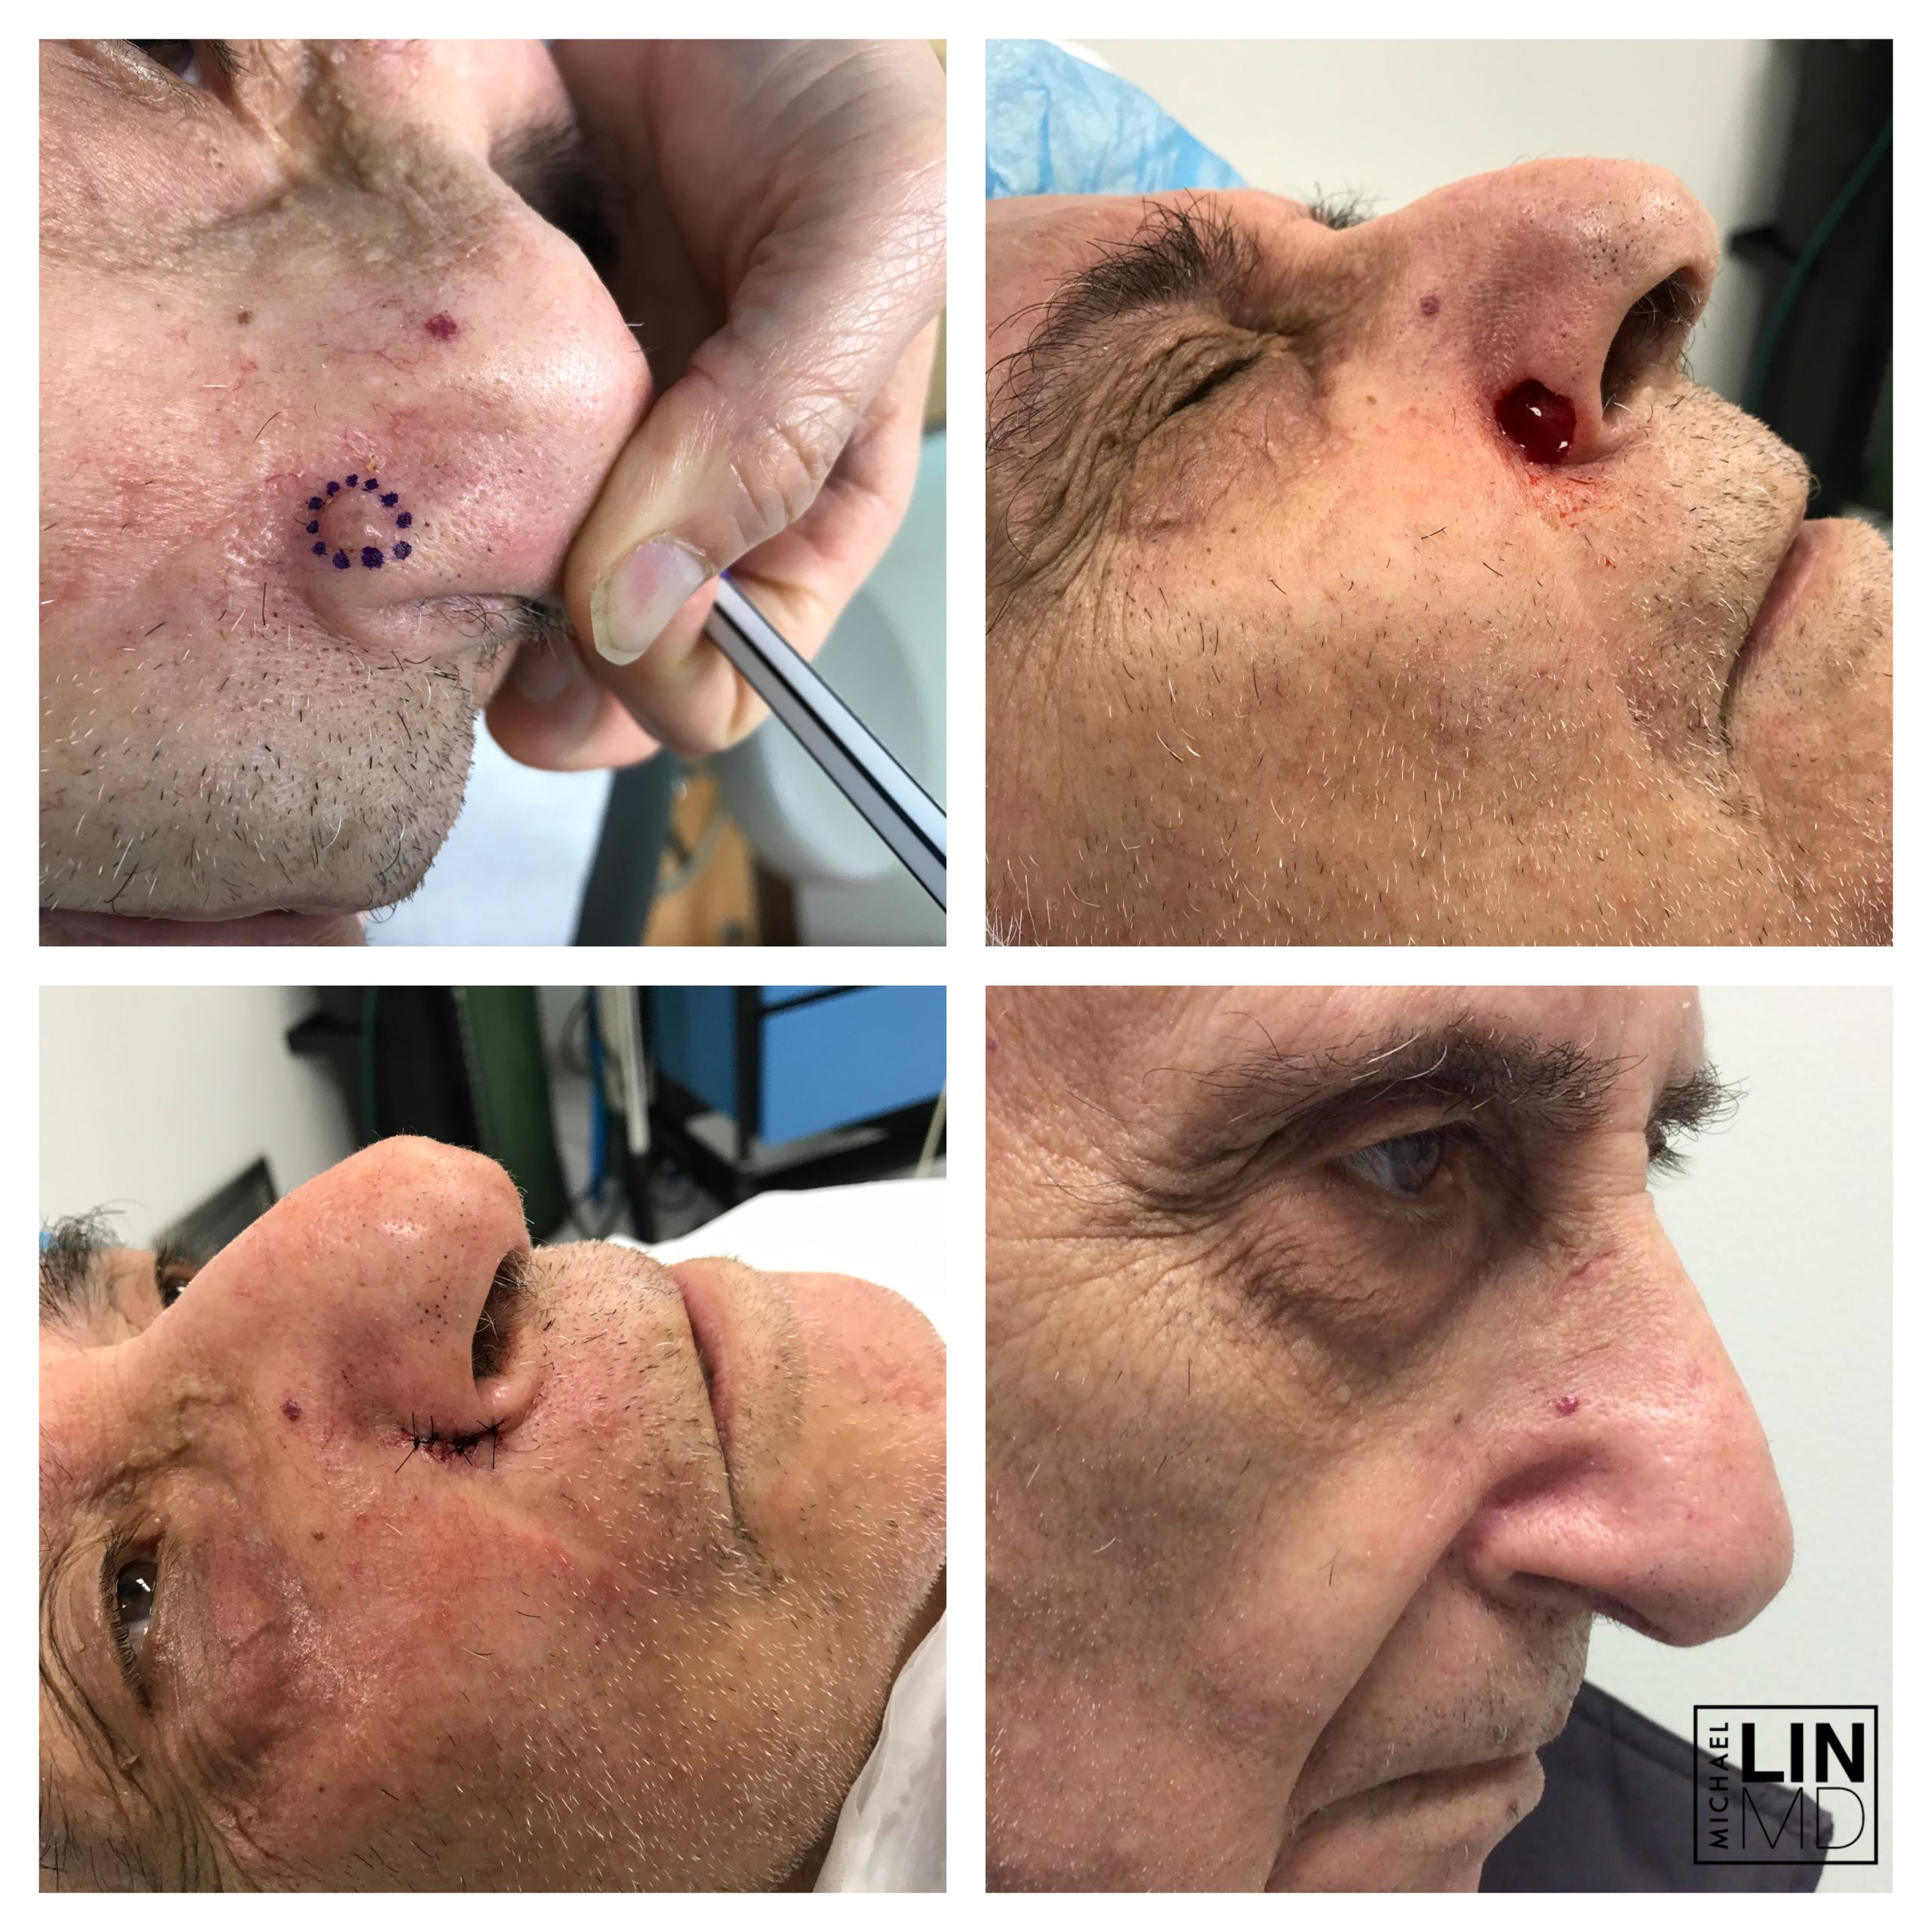 Circular incision on a man's nose